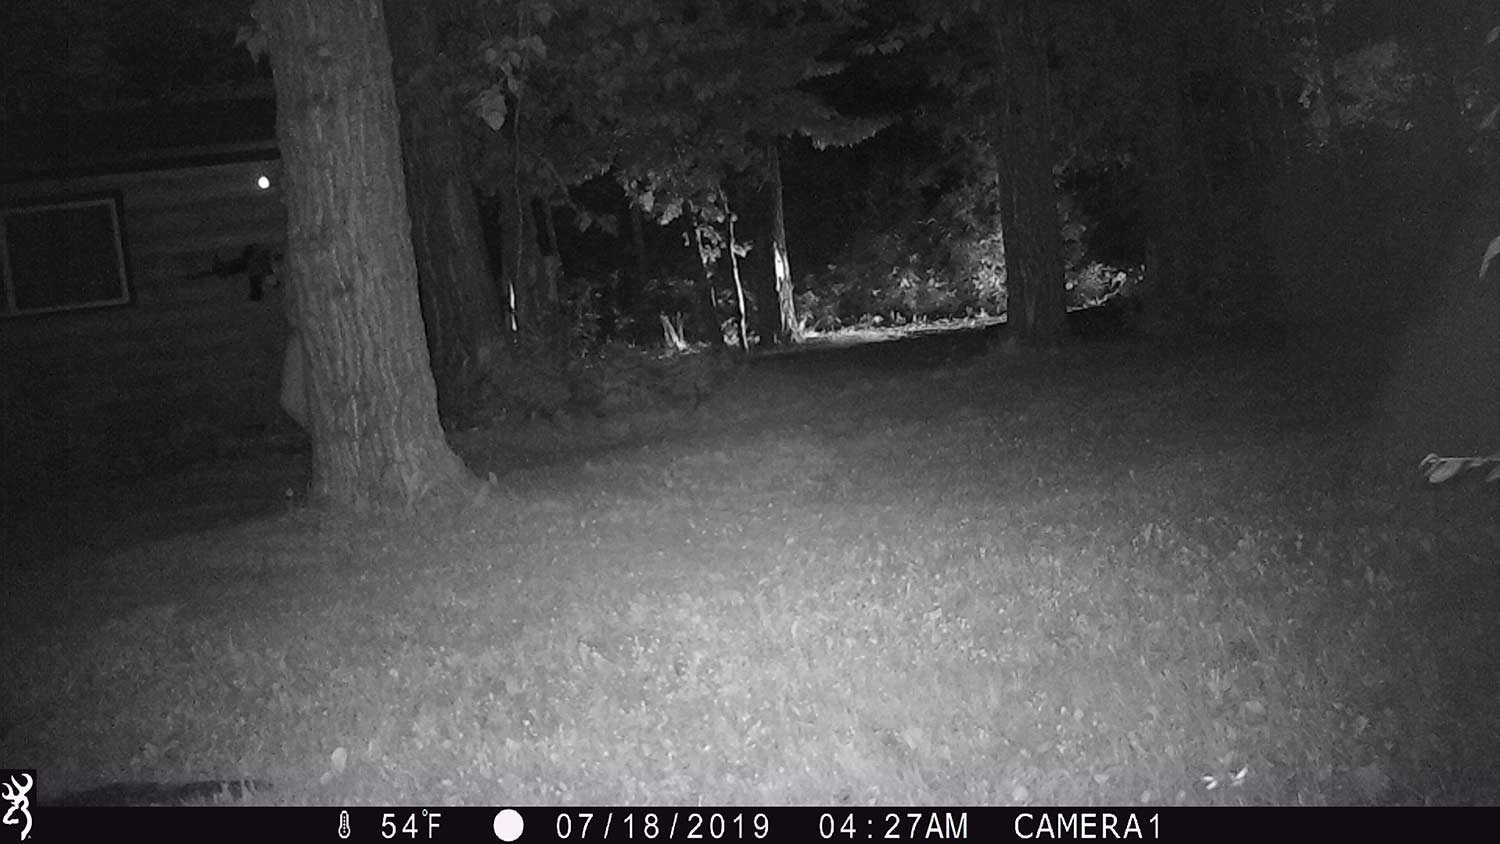 A nighttime camera catching a trespasser on film.